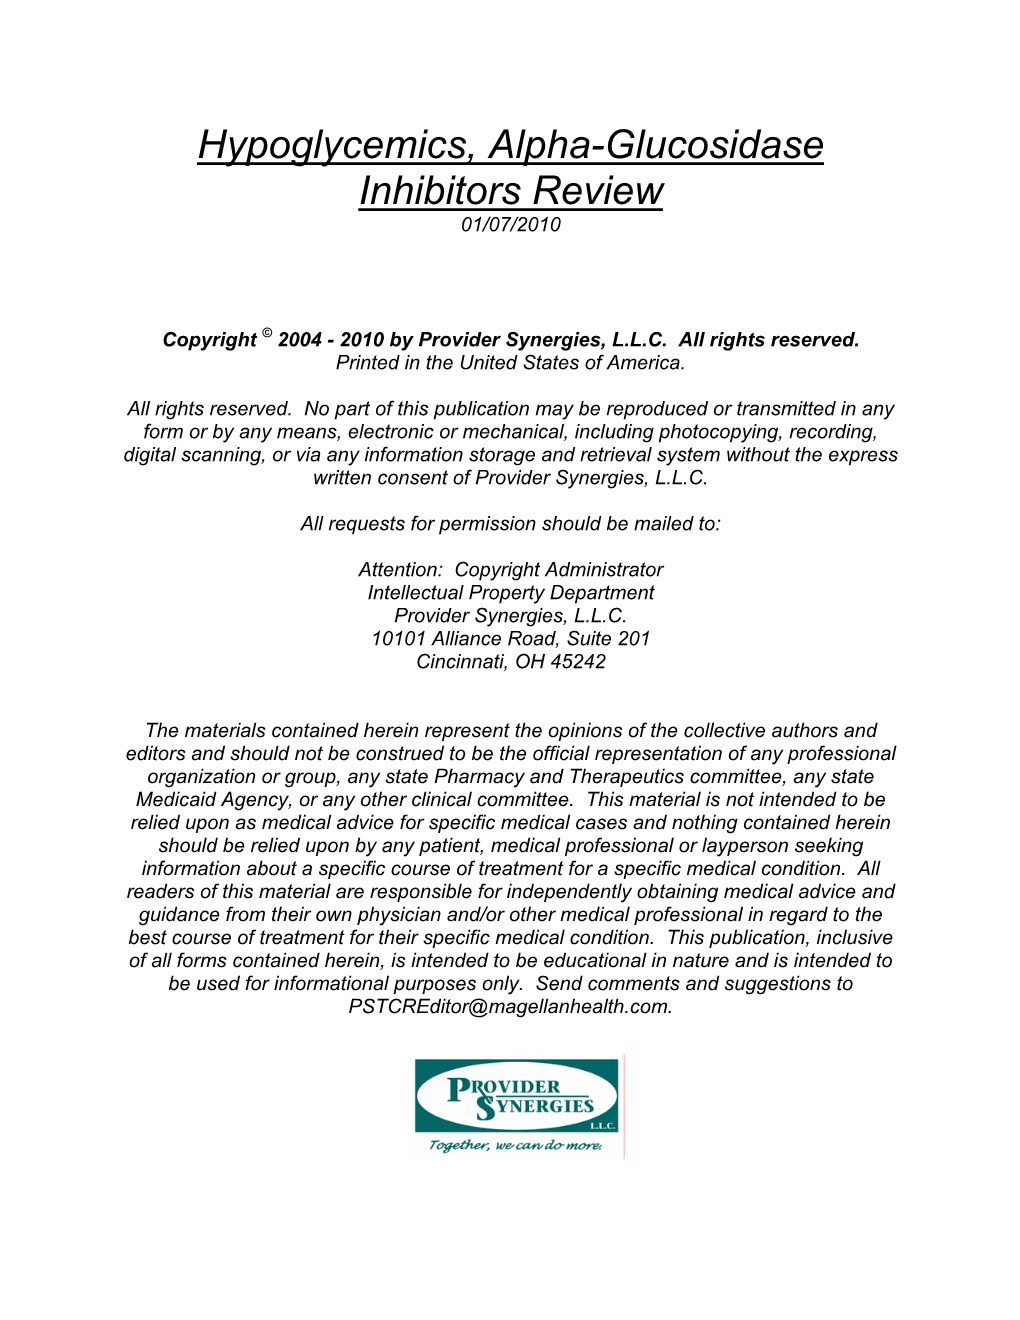 Hypoglycemics, Alpha-Glucosidase Inhibitors Review 01/07/2010